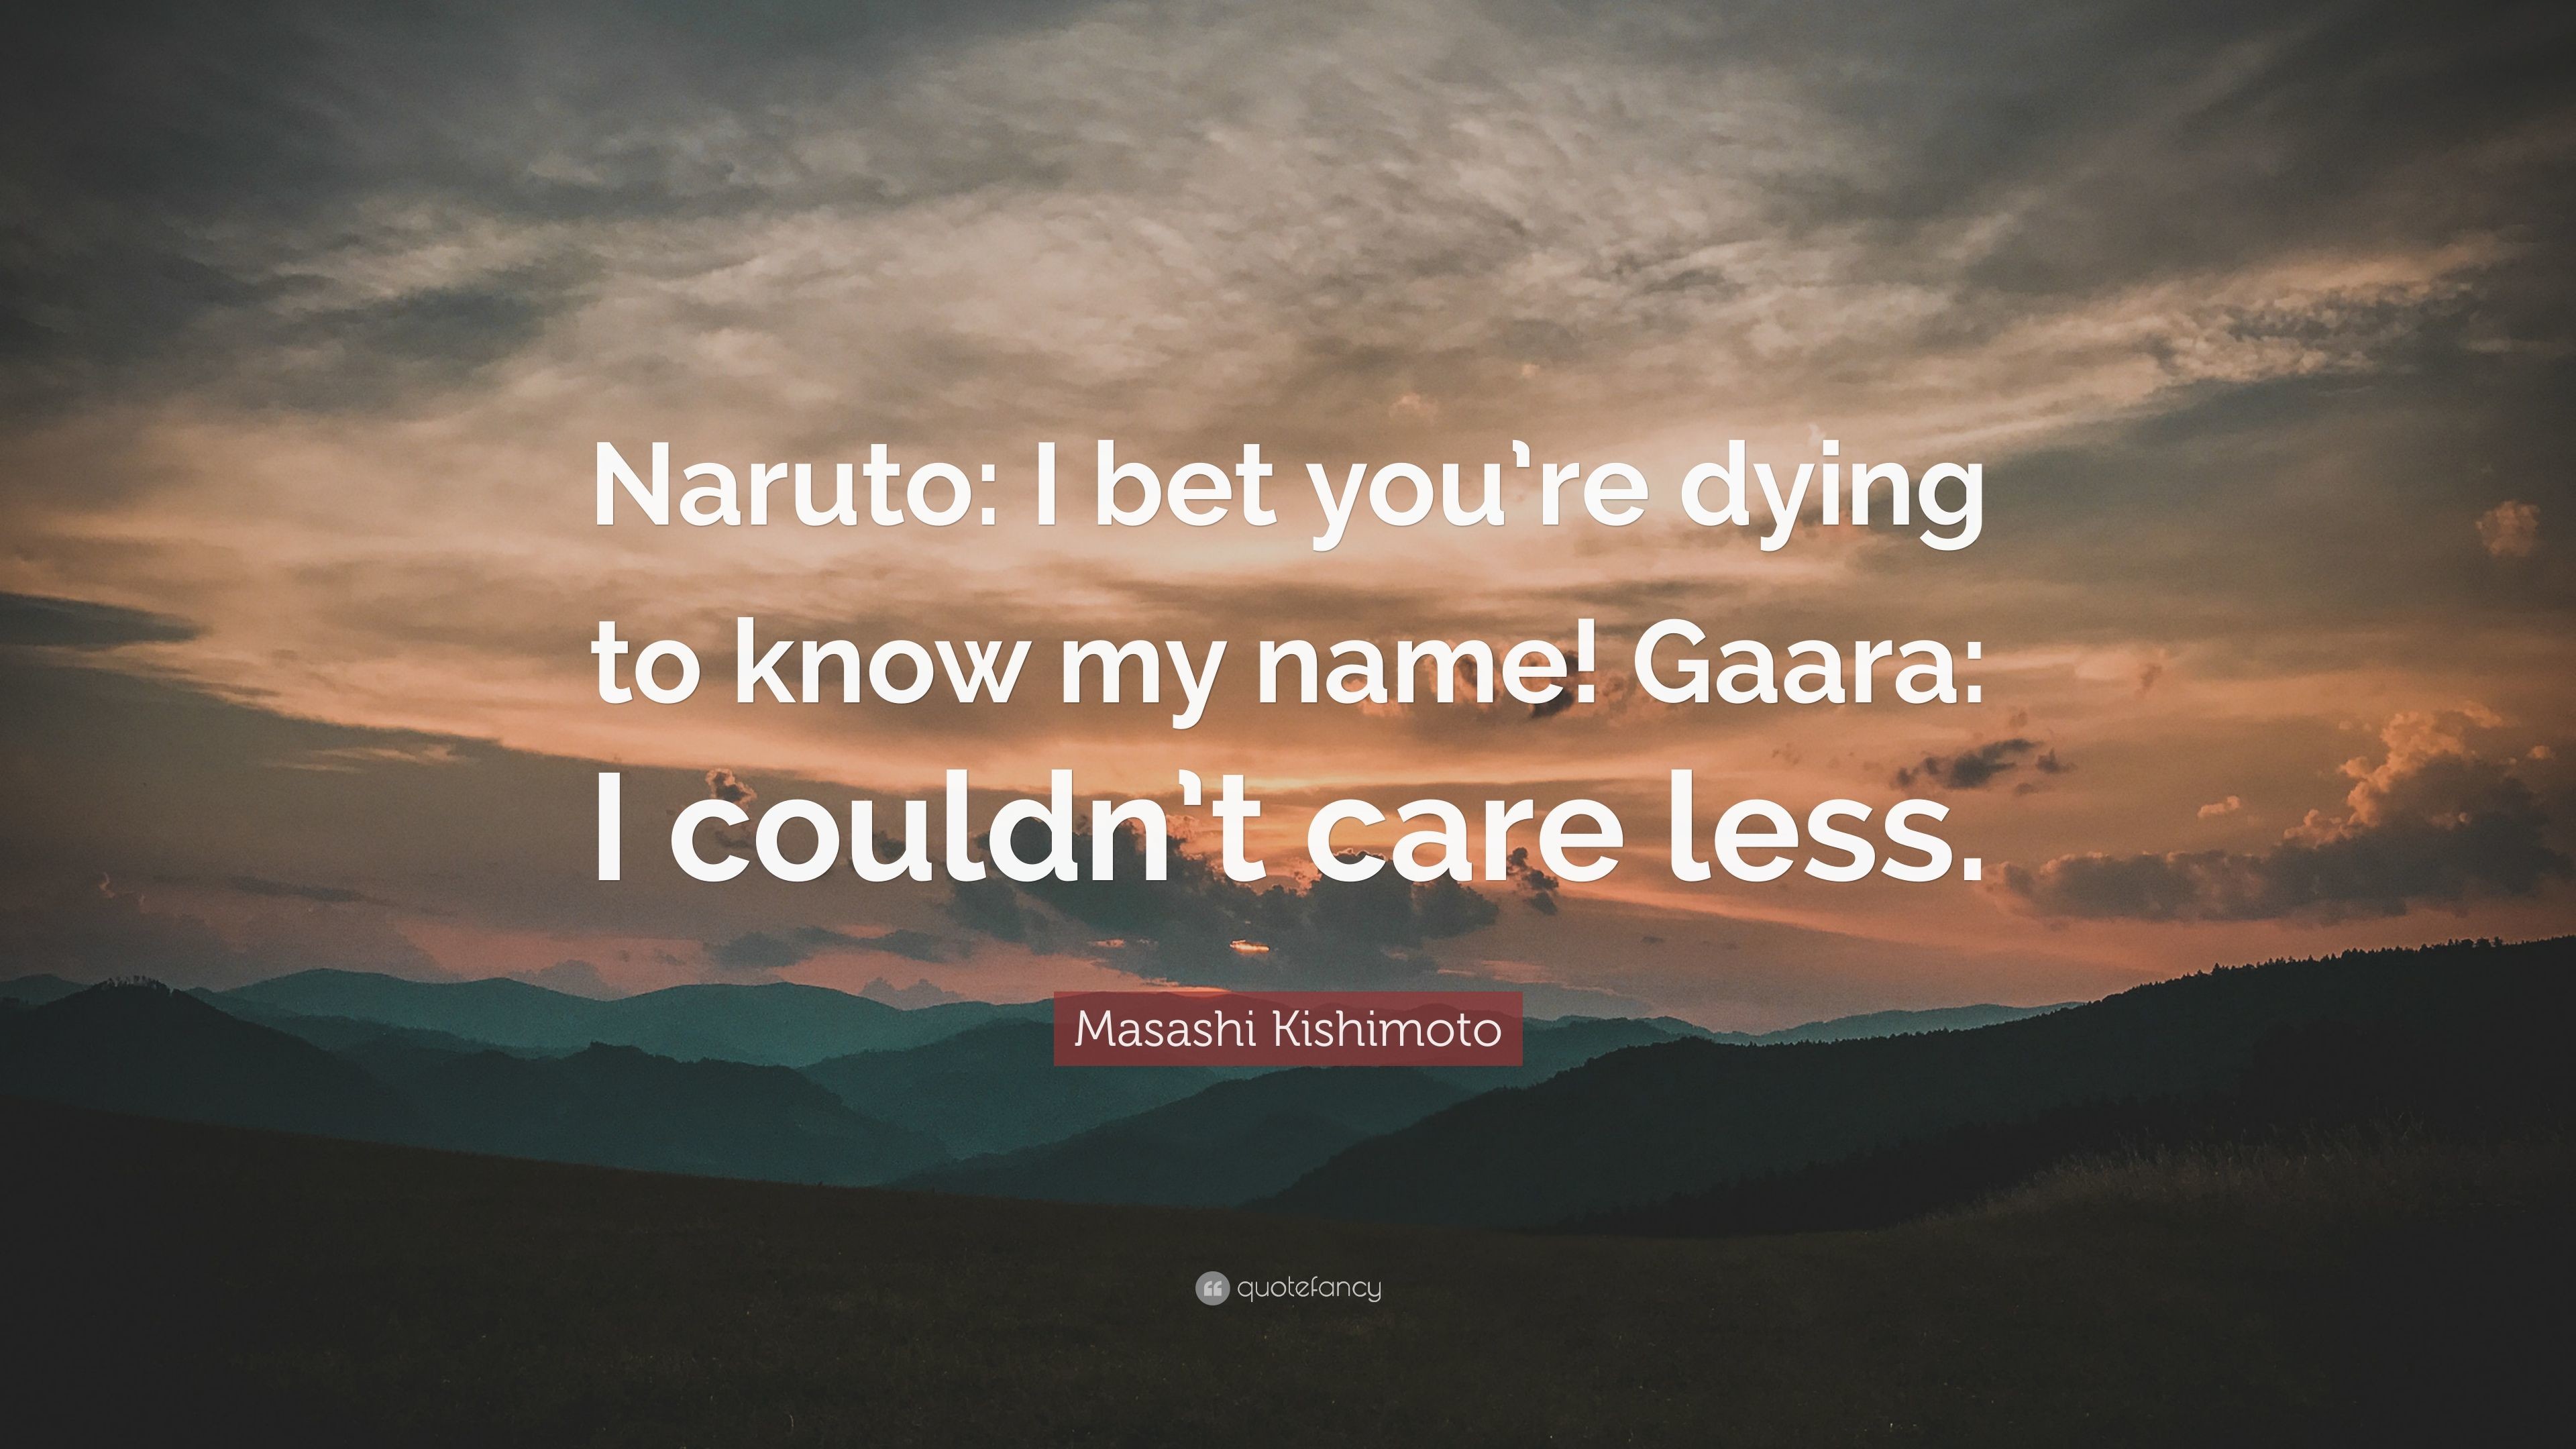 3840x2160 Masashi Kishimoto Quote: “Naruto: I bet you're dying to know my